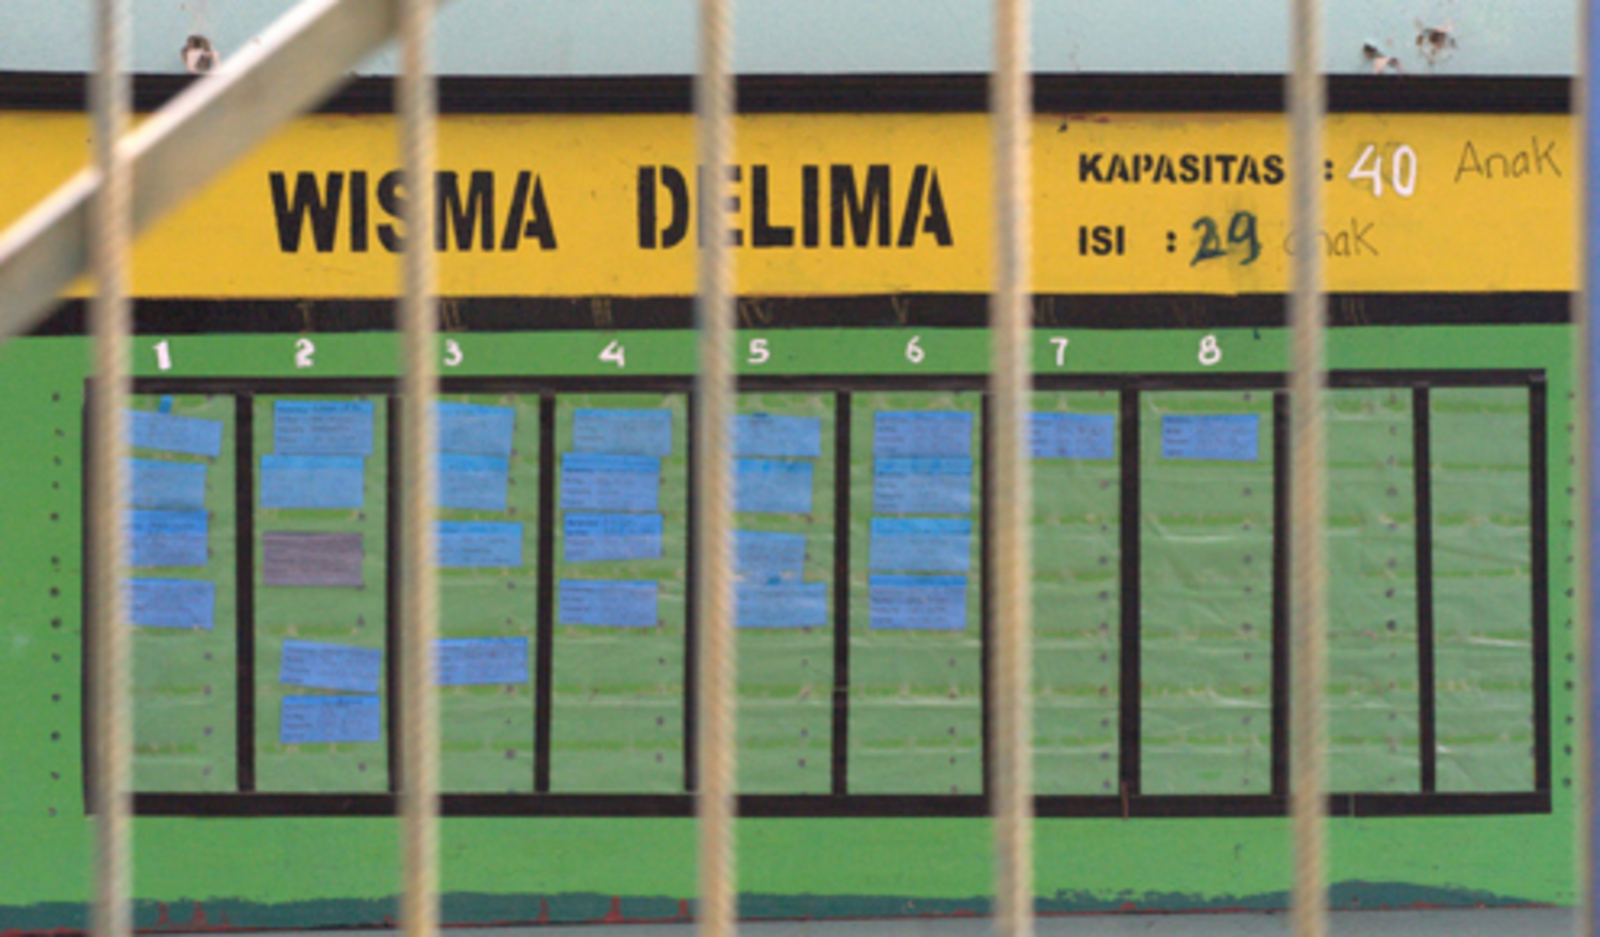 A list of juvenile detainees in the “Wisma Delima” block at Tangerang Juvenile Prison